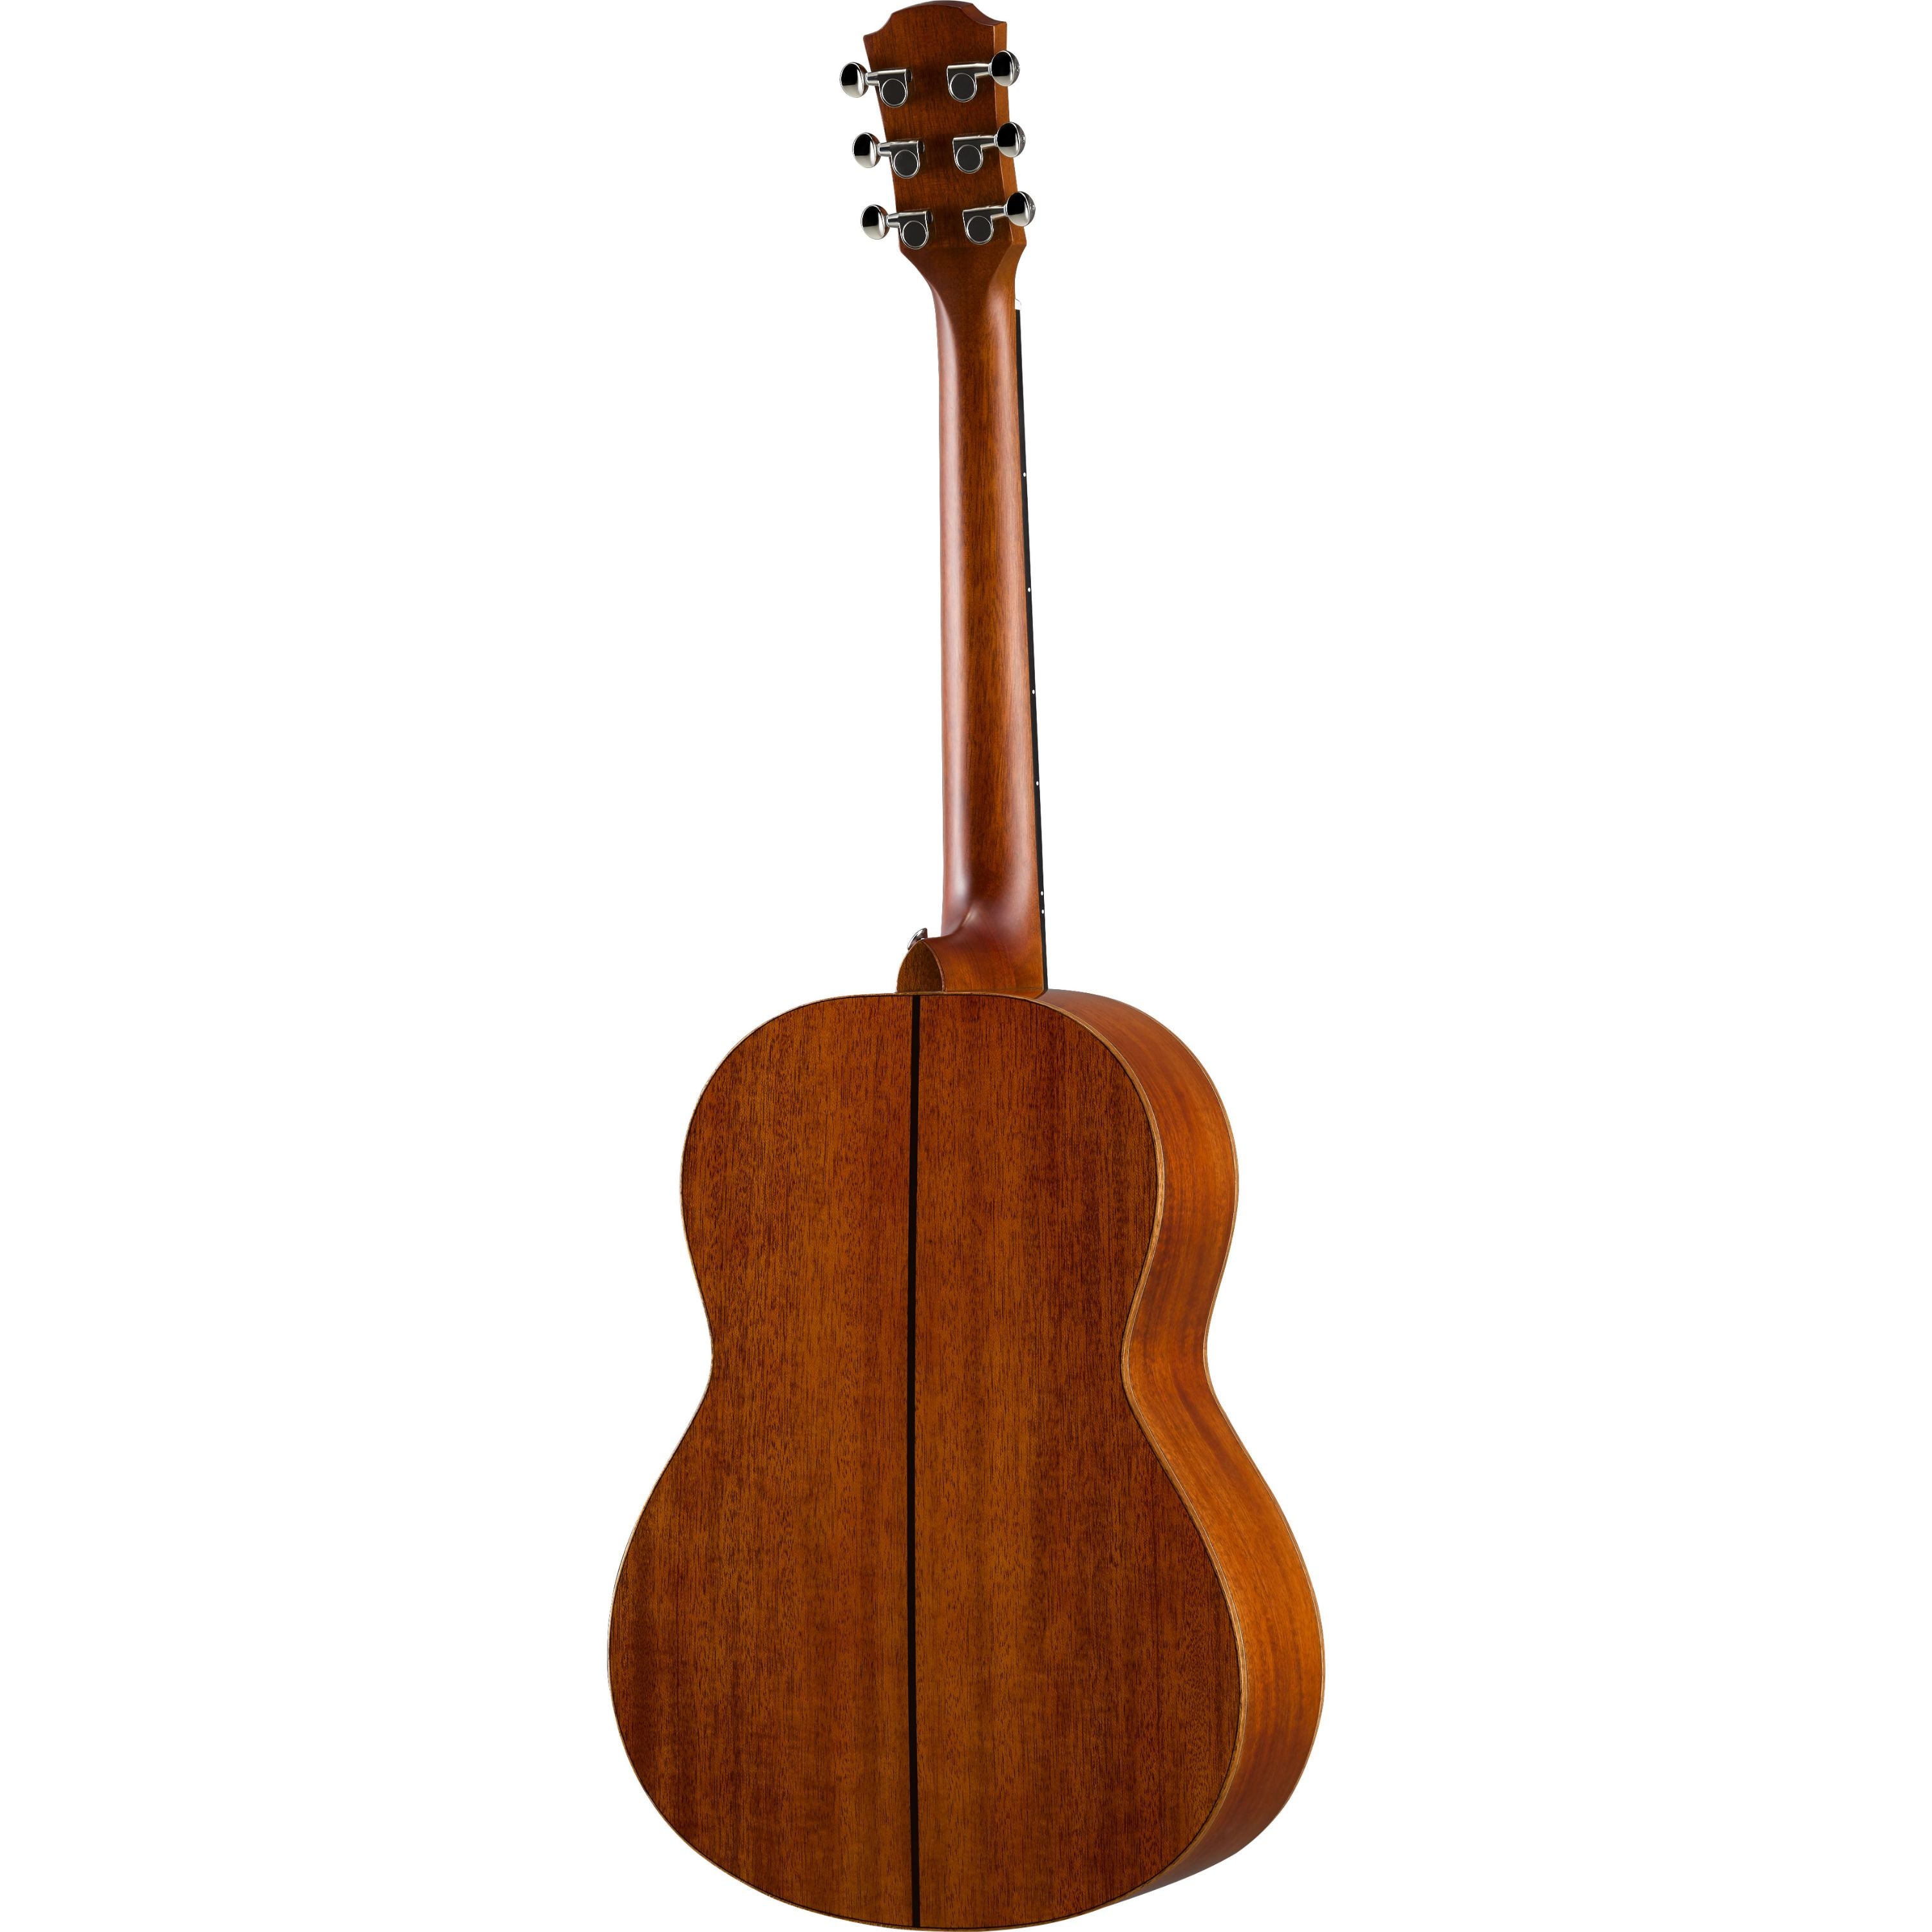 Yamaha CSF3M Modern Parlor Acoustic Guitar, Vintage Natural